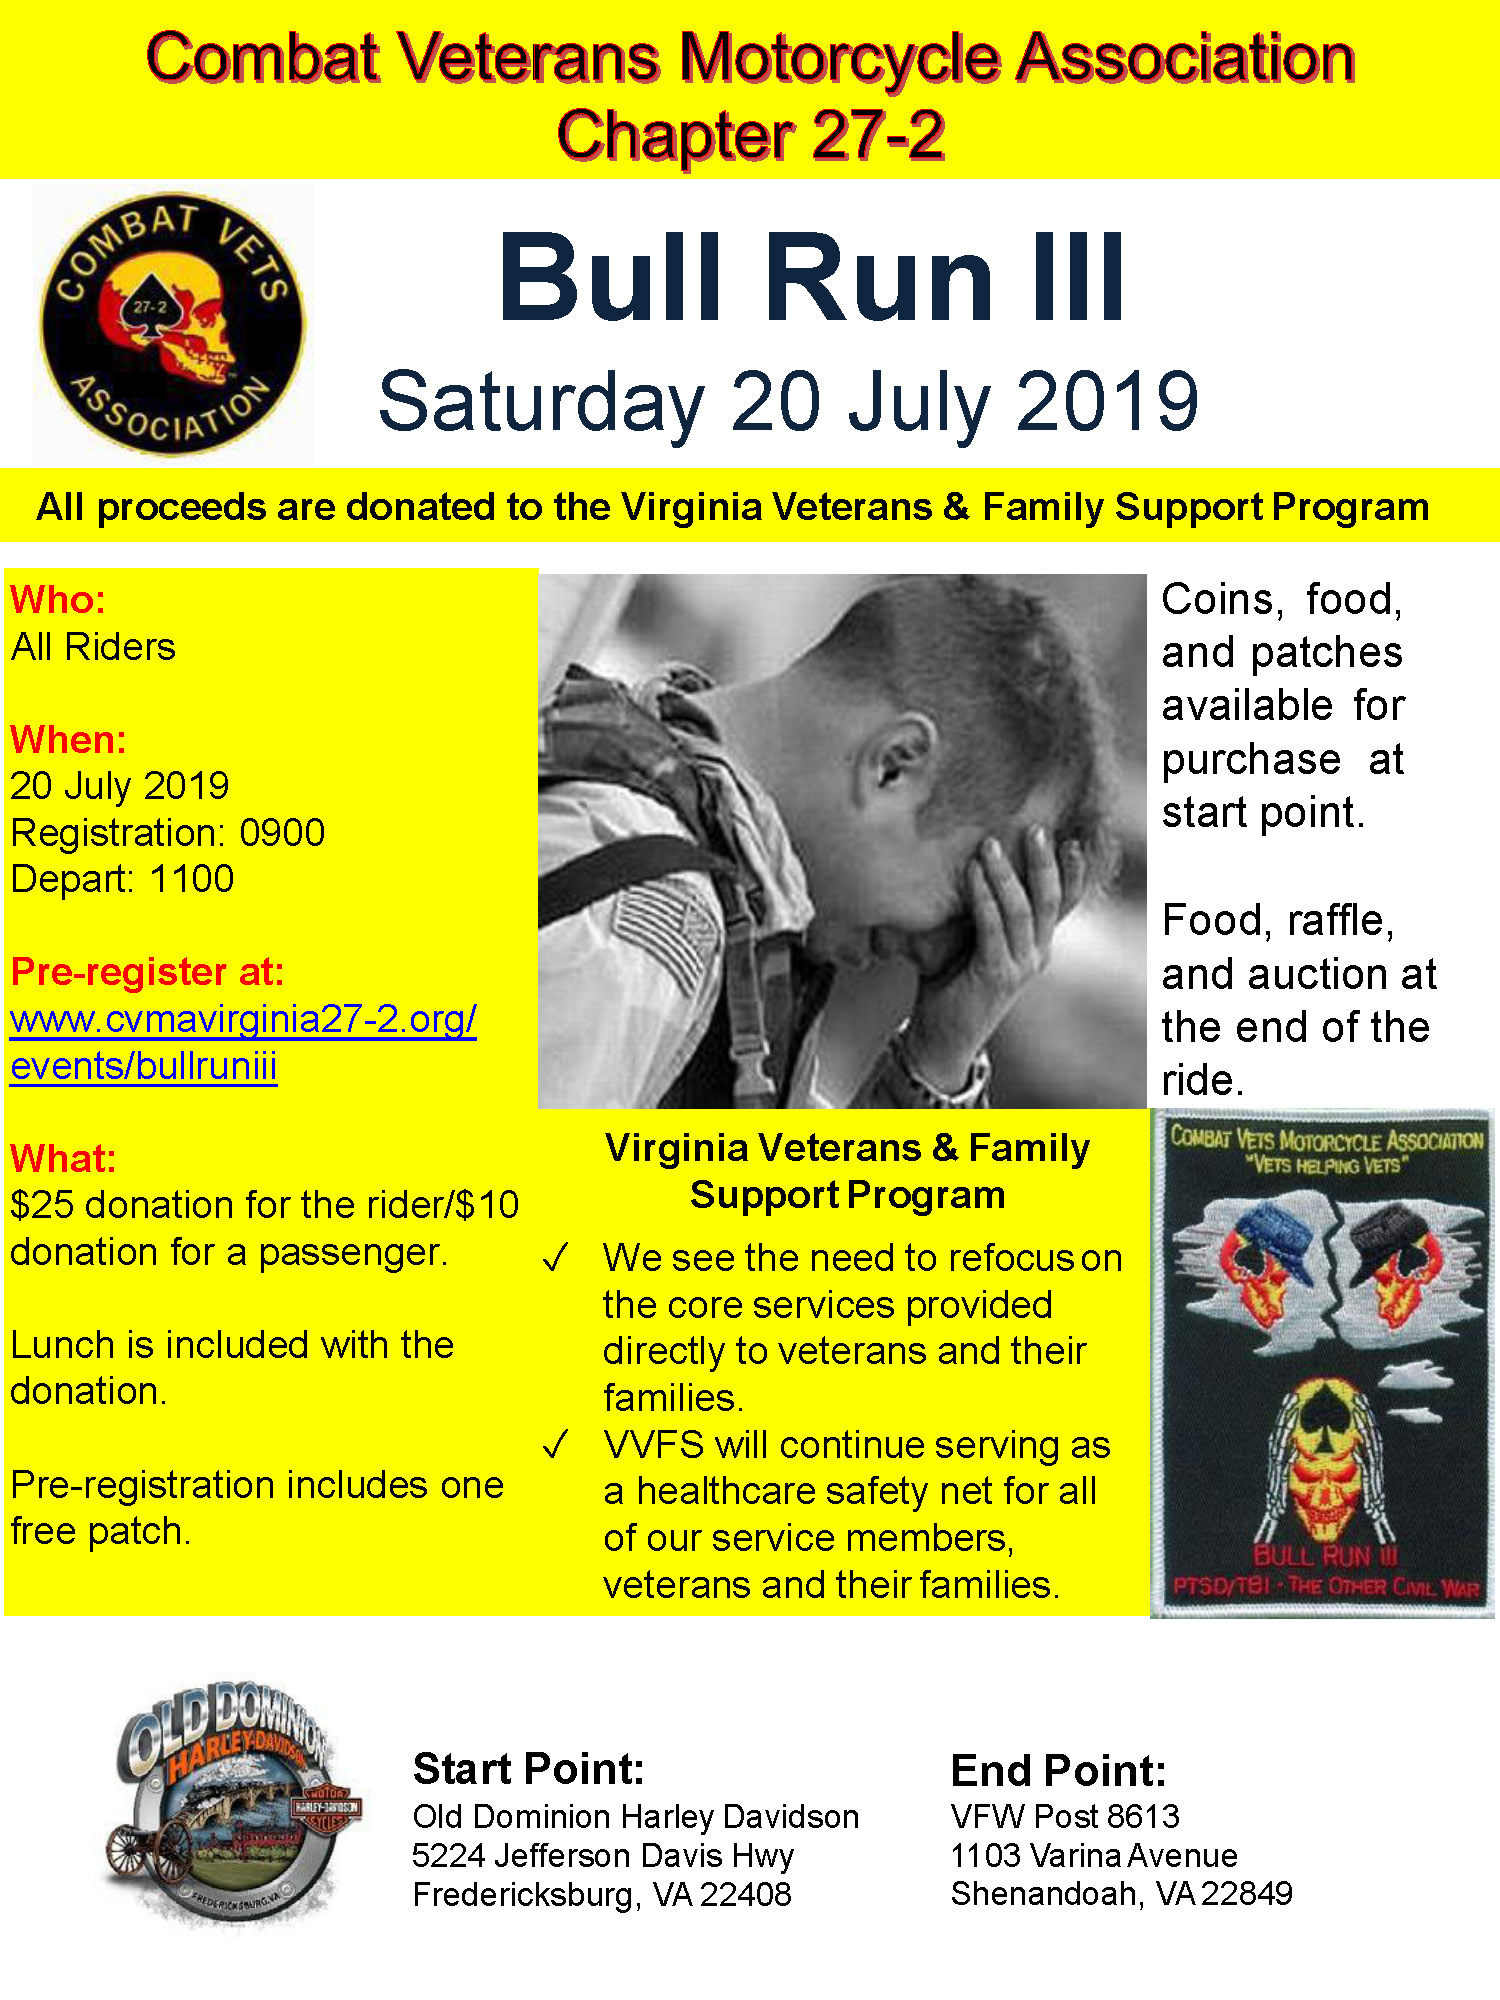 Combat Veterans Motorcycle Association, Chapter 27-2, Bull Run III